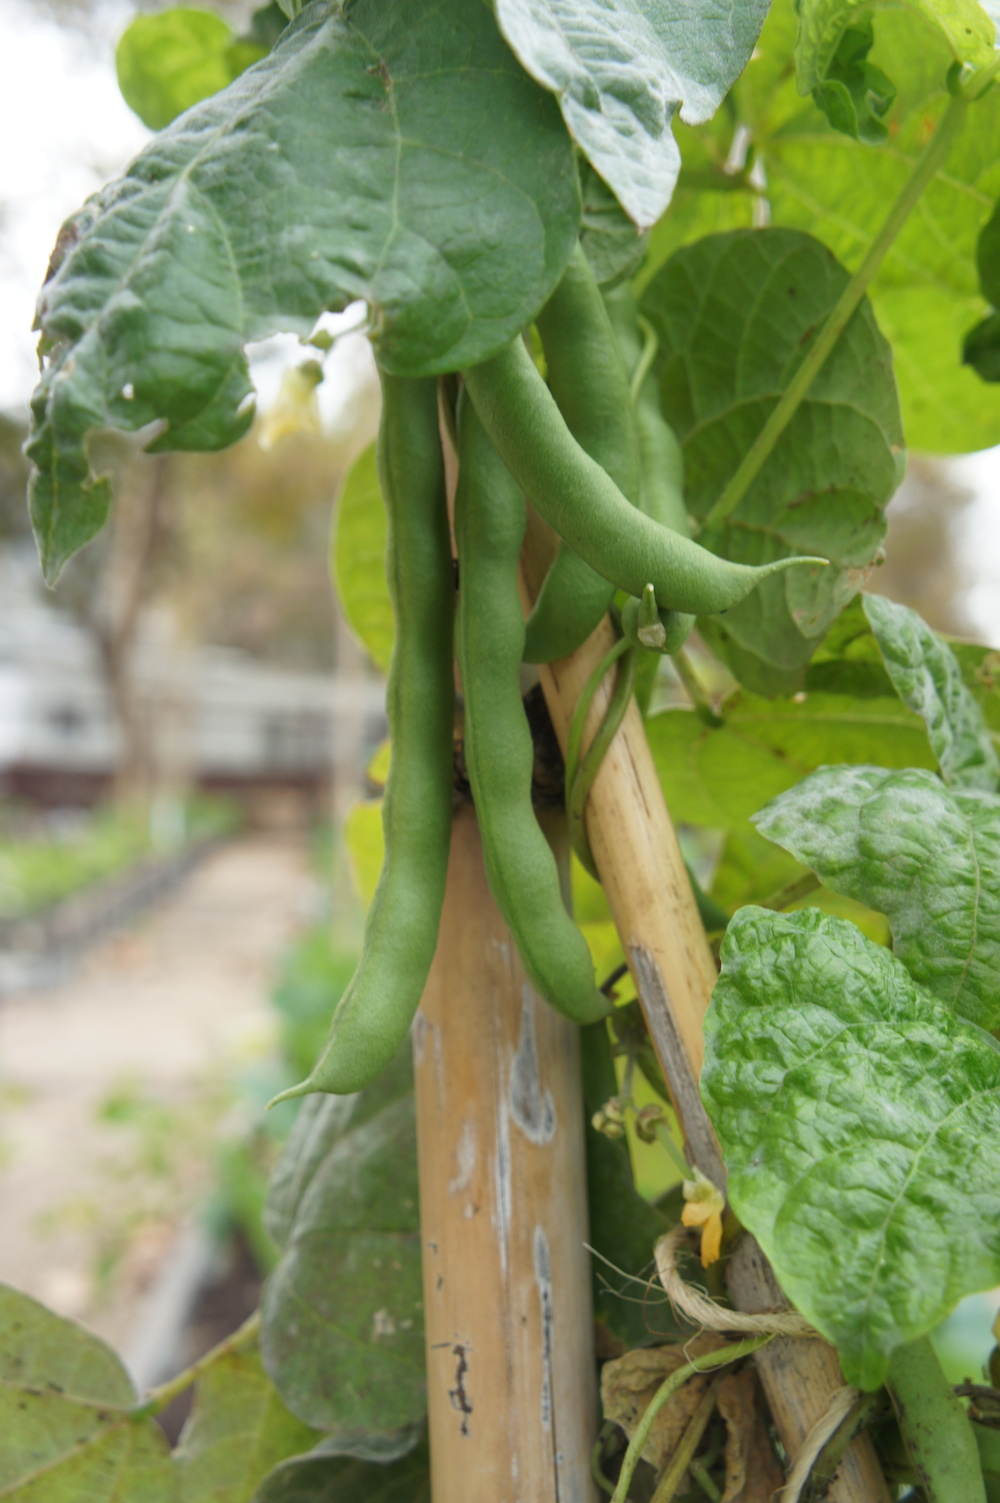 Fresh green beans on the vine at City Slicker Farms. Photo: Angela Johnston